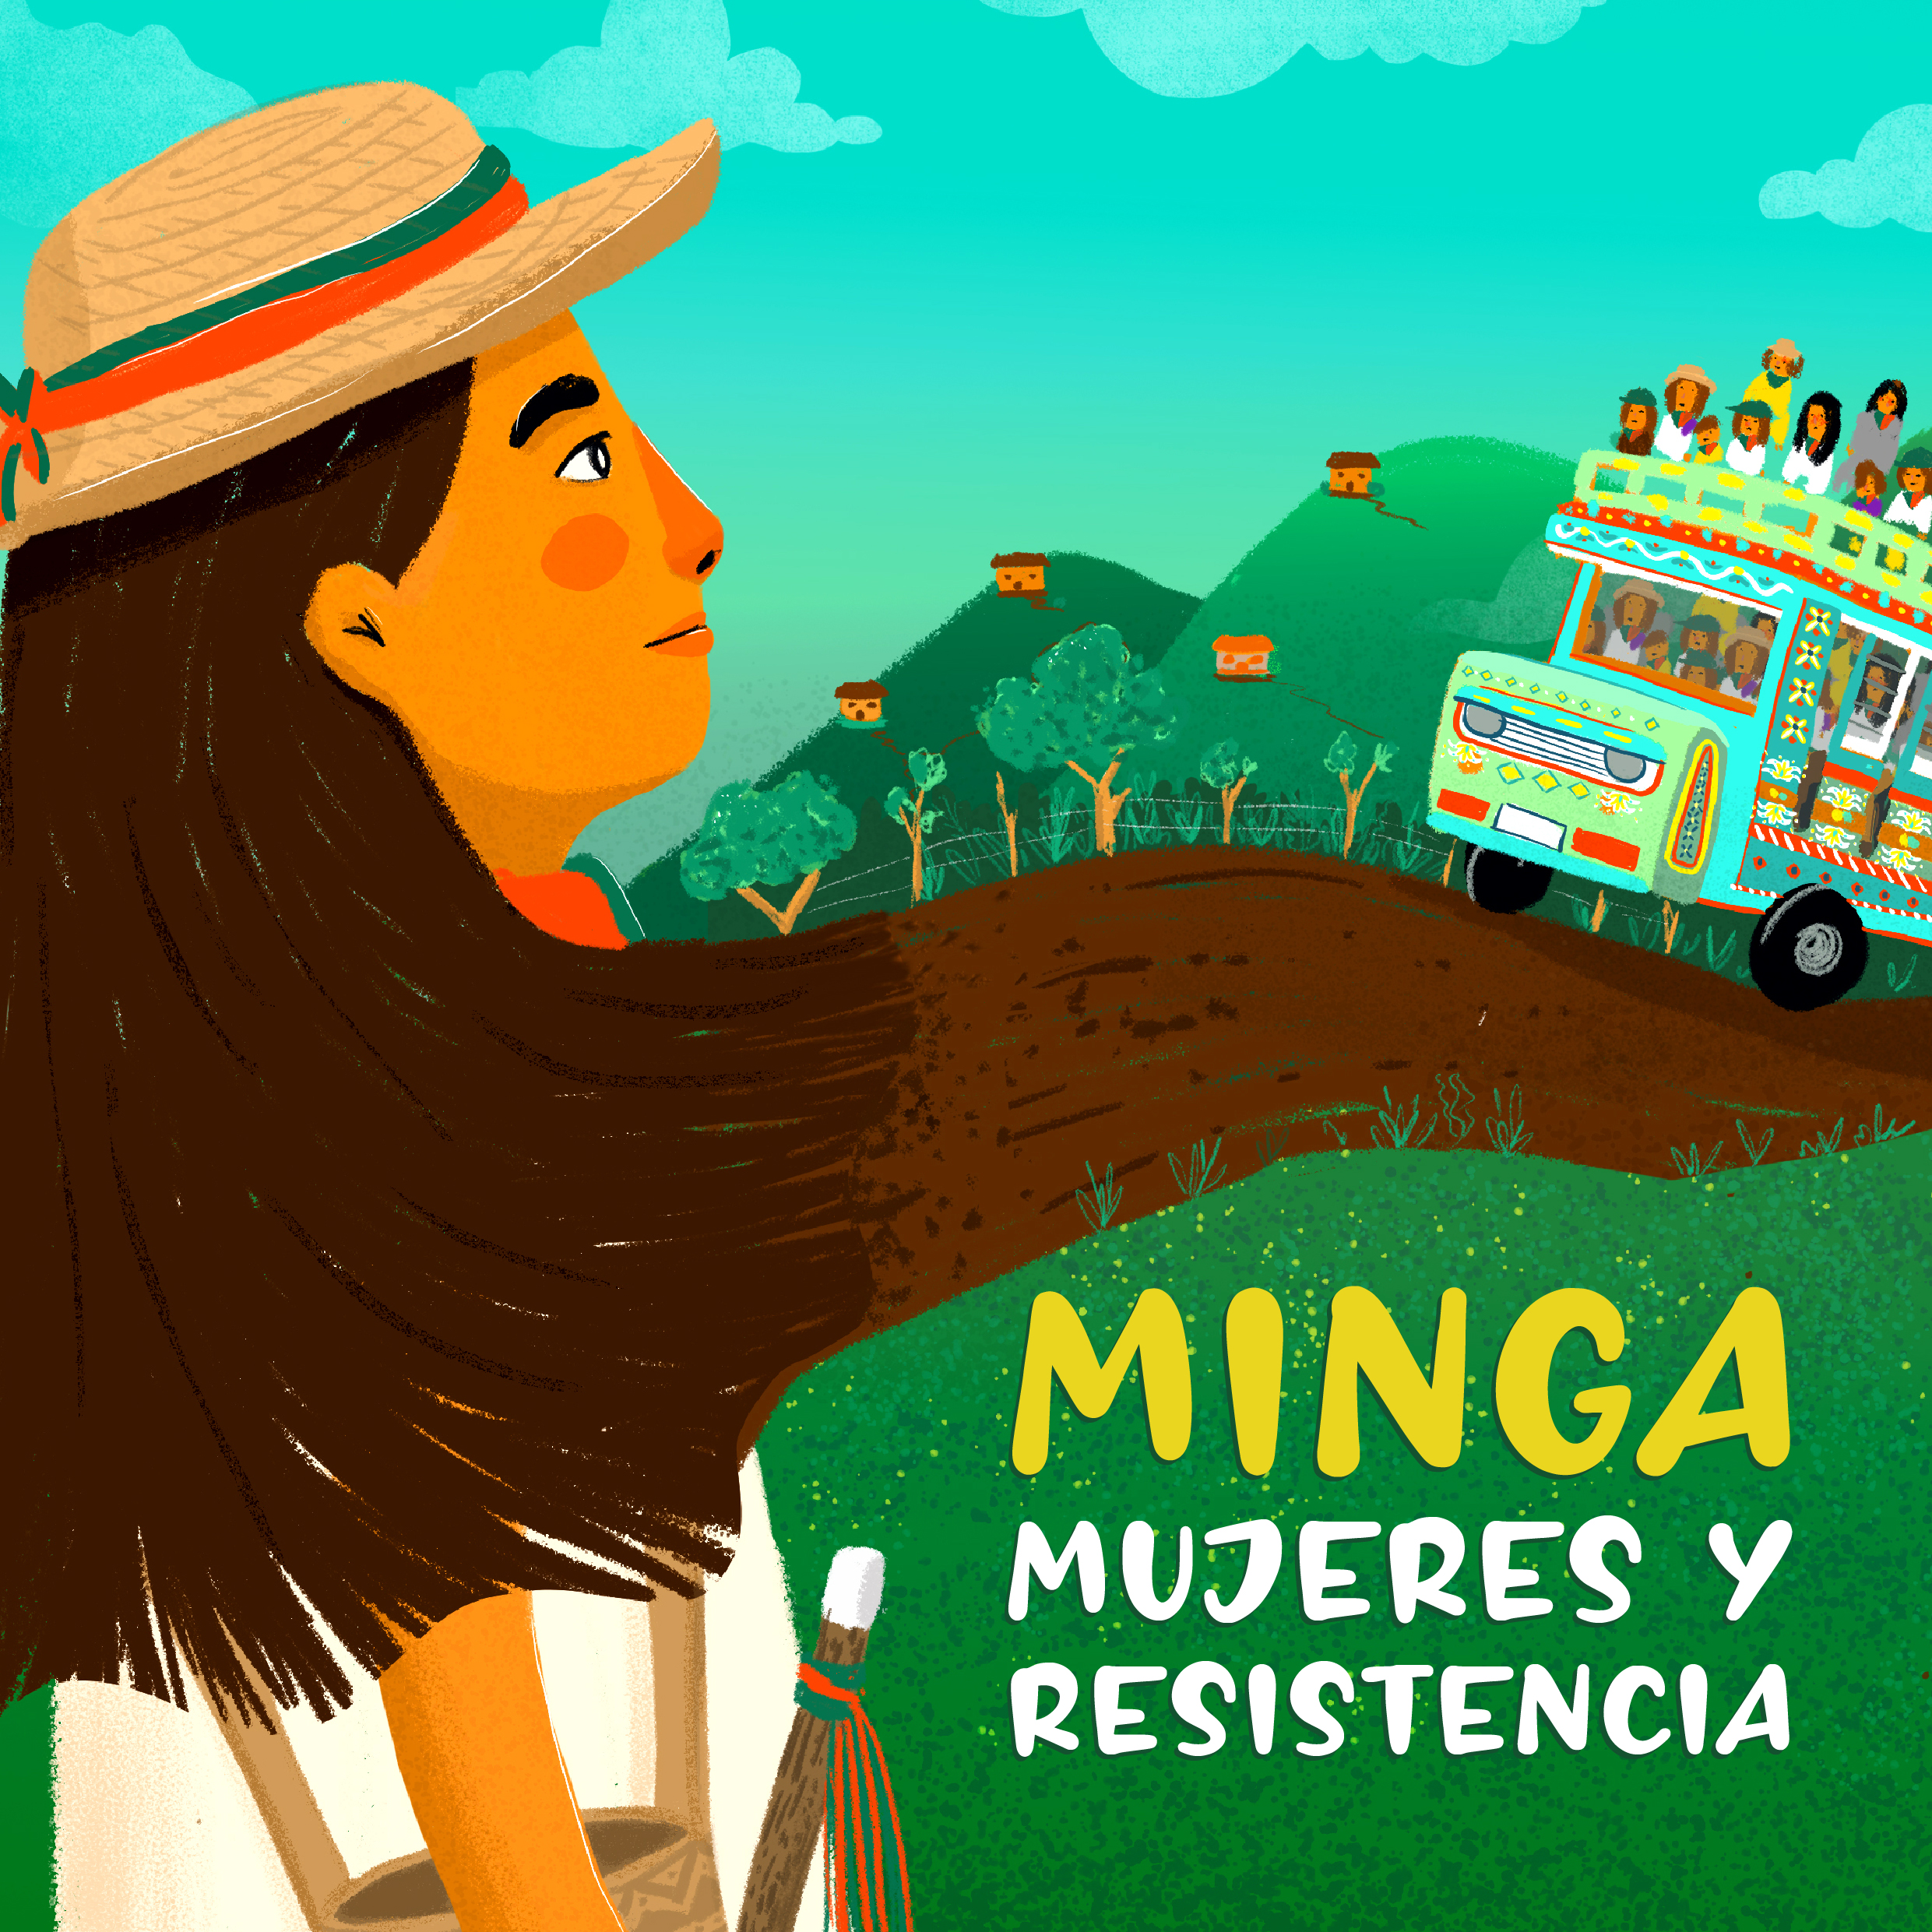 Minga: mujeres y resistencia